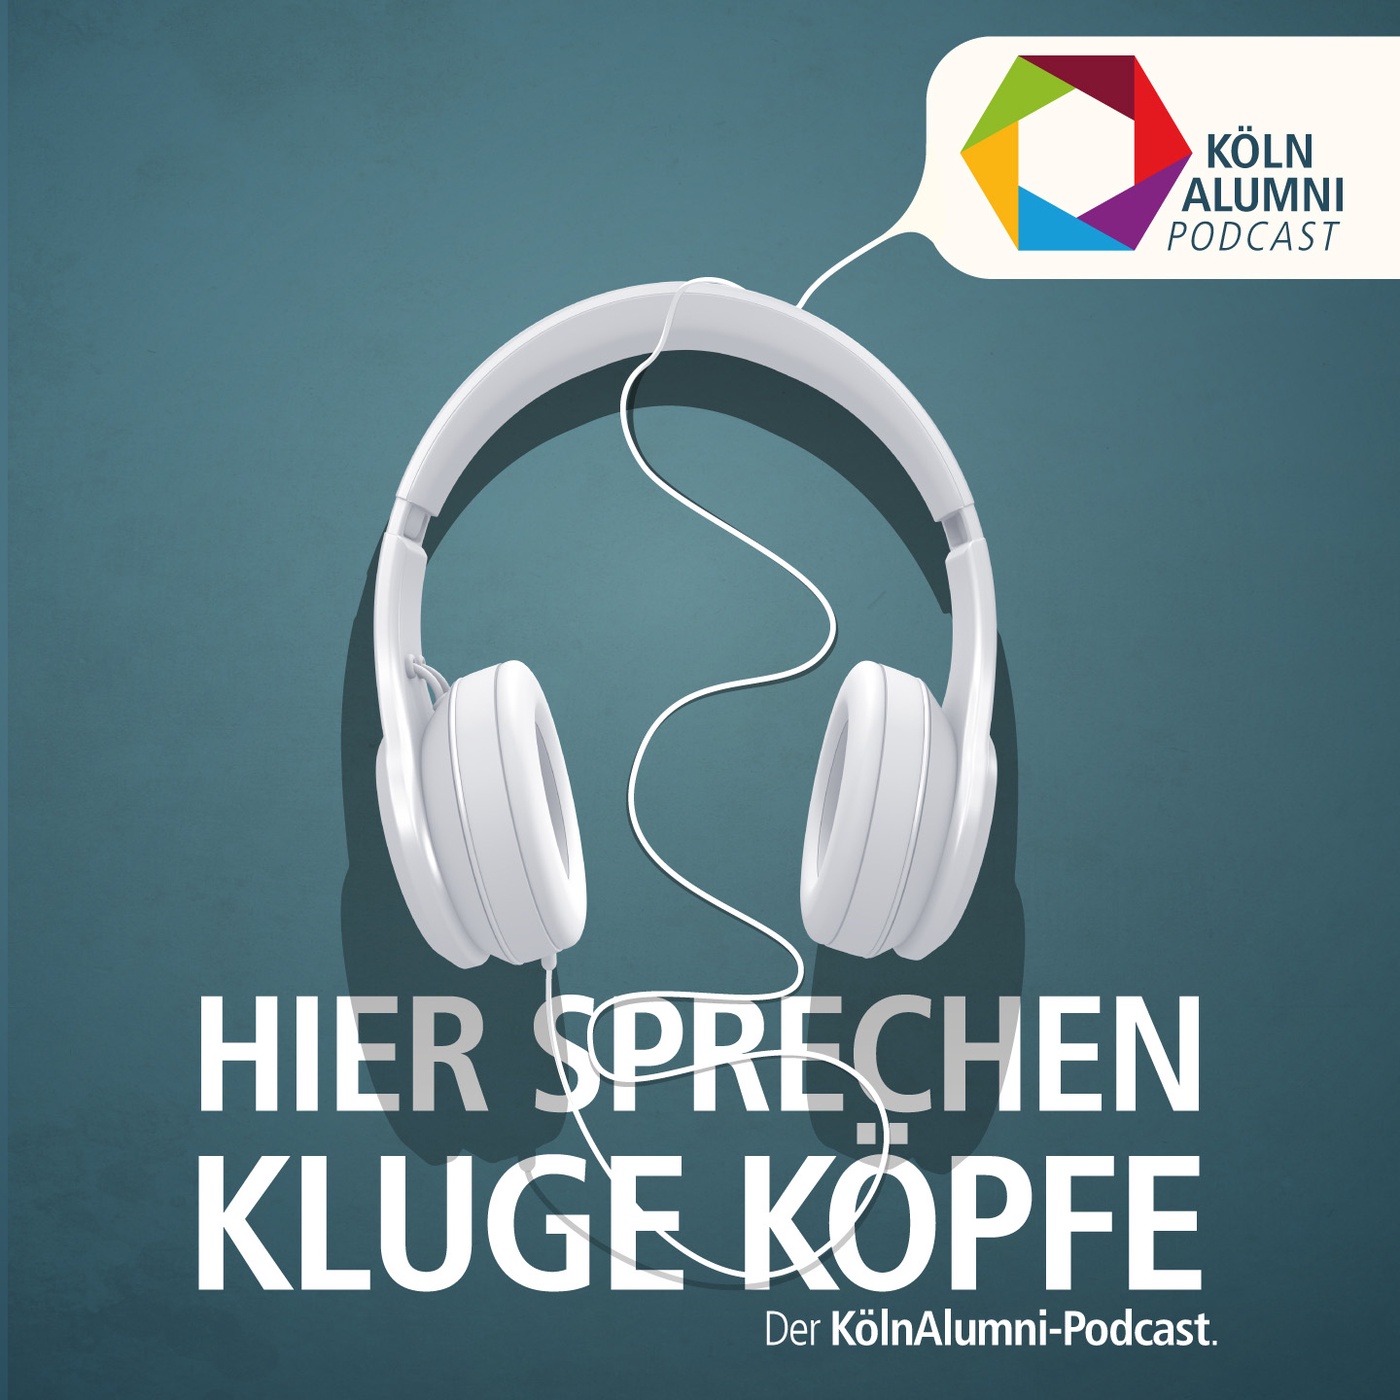 KölnAlumni | Hier sprechen: Kluge Köpfe!